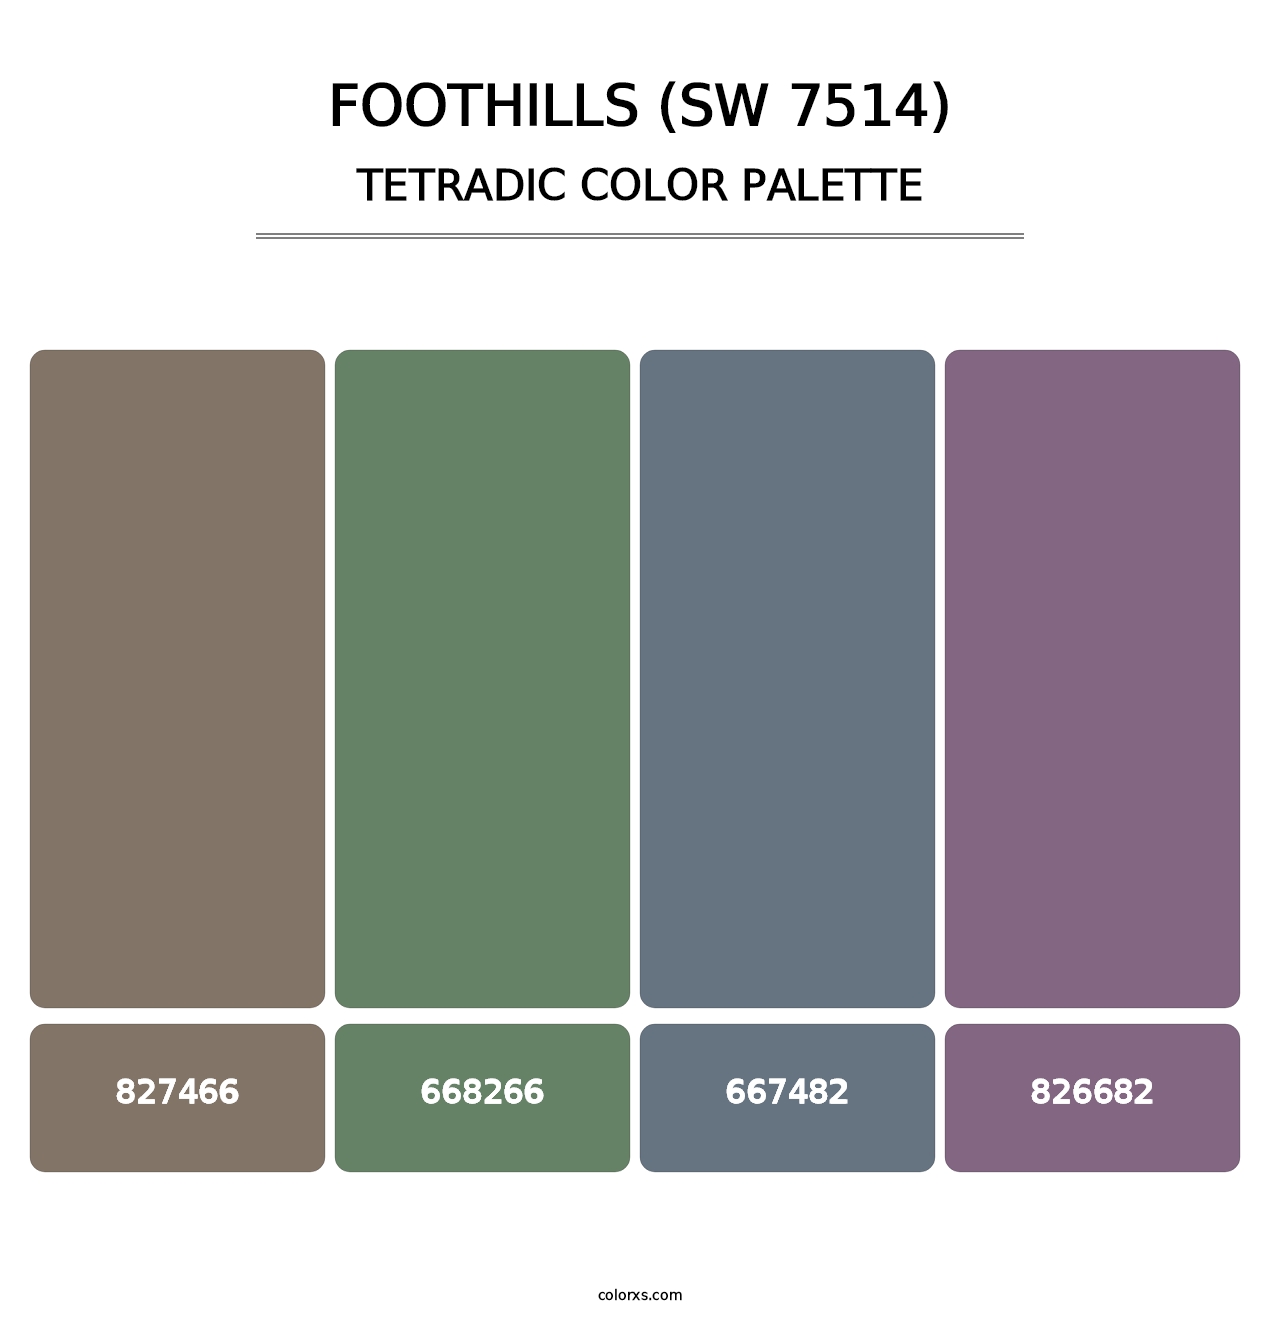 Foothills (SW 7514) - Tetradic Color Palette